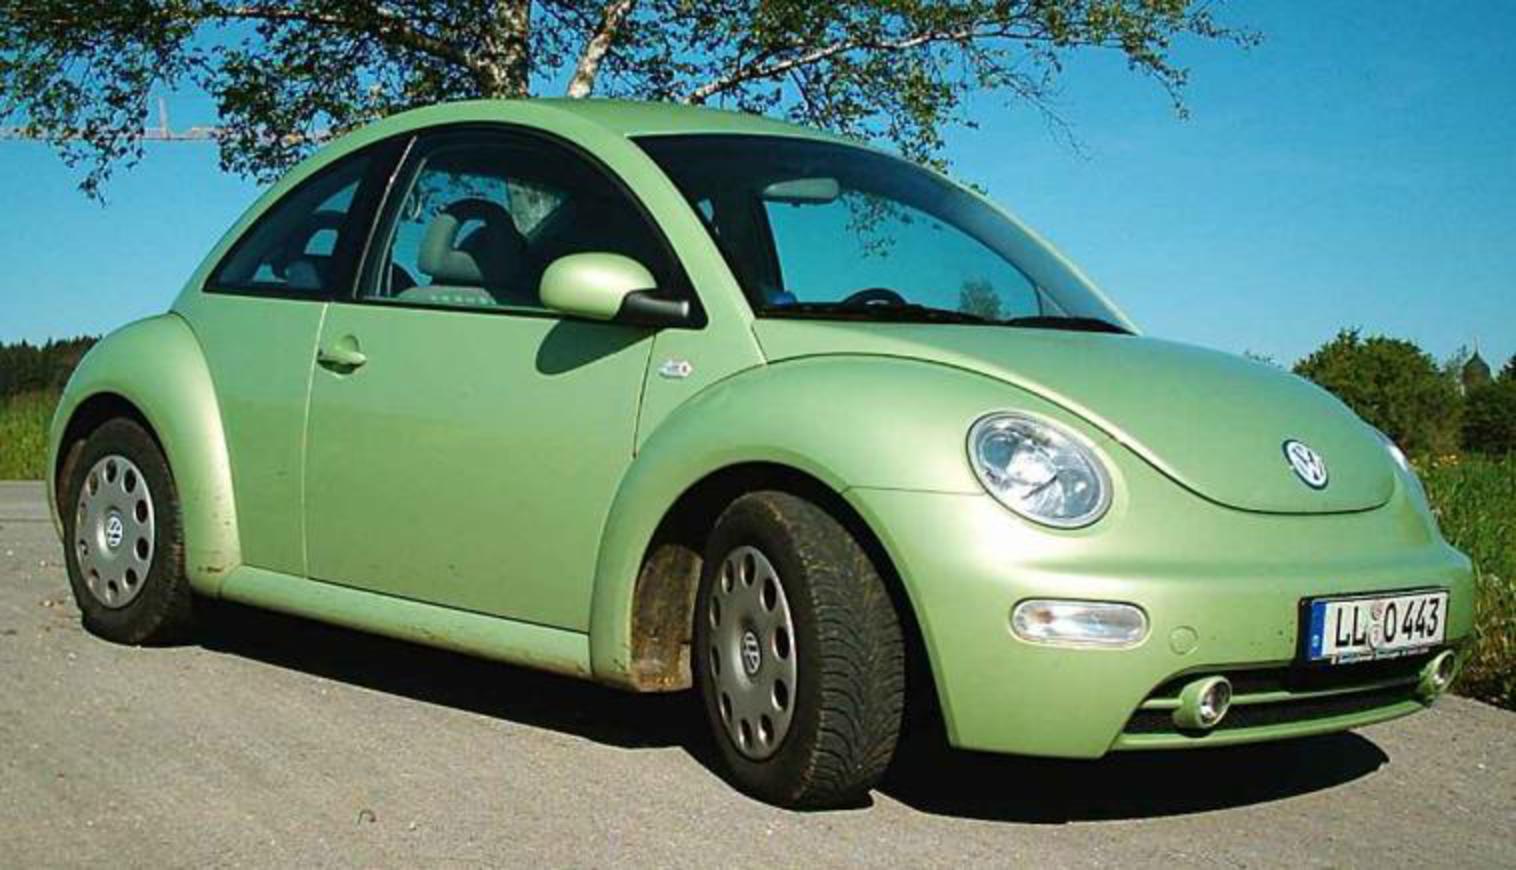 Volkswagen New Beetle : ãƒ•ã‚©ãƒ«ã‚¯ã‚¹ãƒ¯ãƒ¼ã‚²ãƒ³ãƒ»ãƒ‹ãƒ¥ãƒ¼ãƒ“ãƒ¼ãƒˆãƒ«